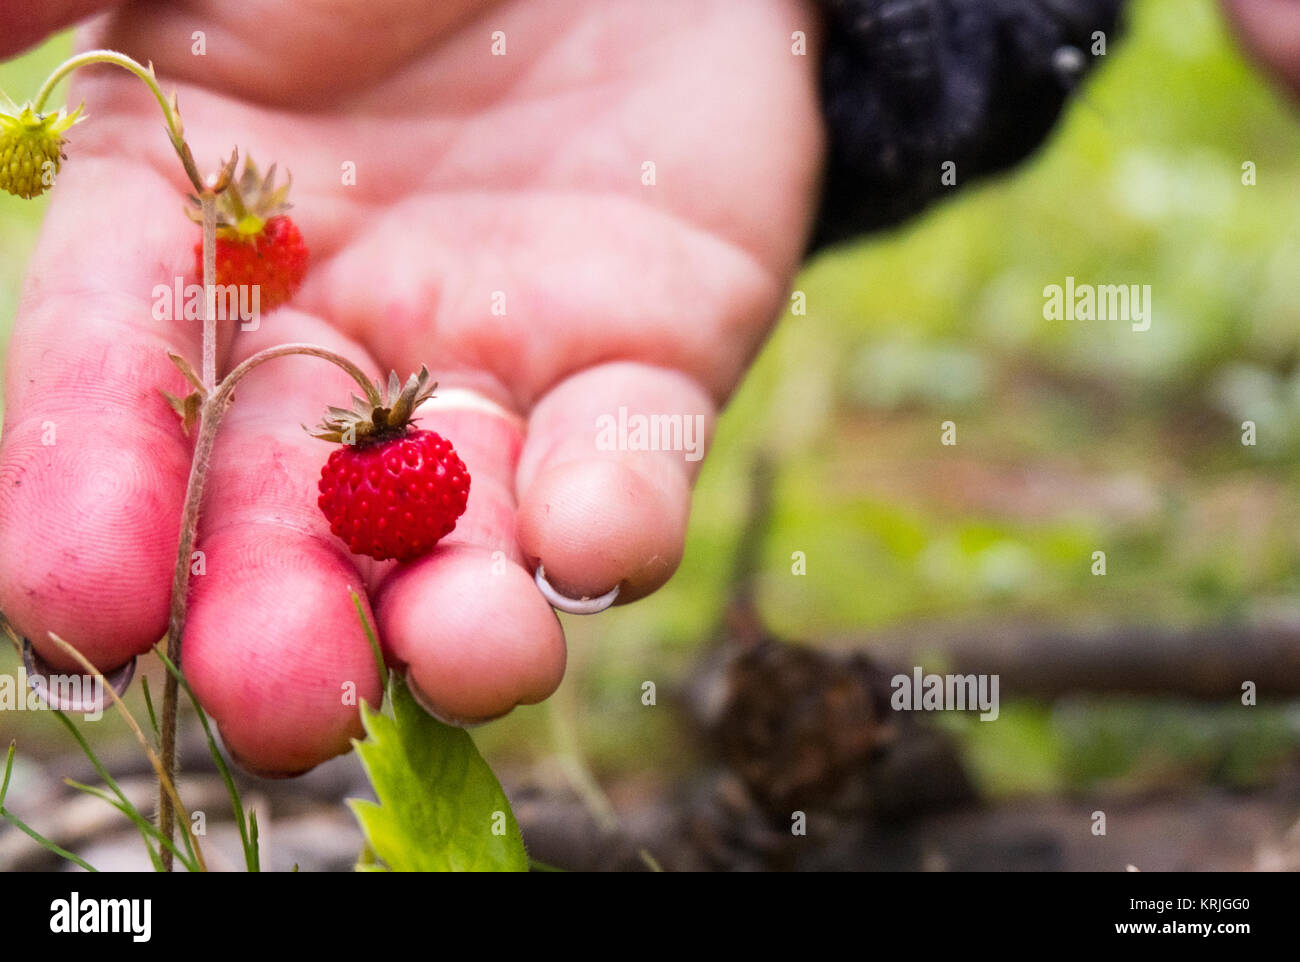 Hand holding tiny red strawberry Stock Photo